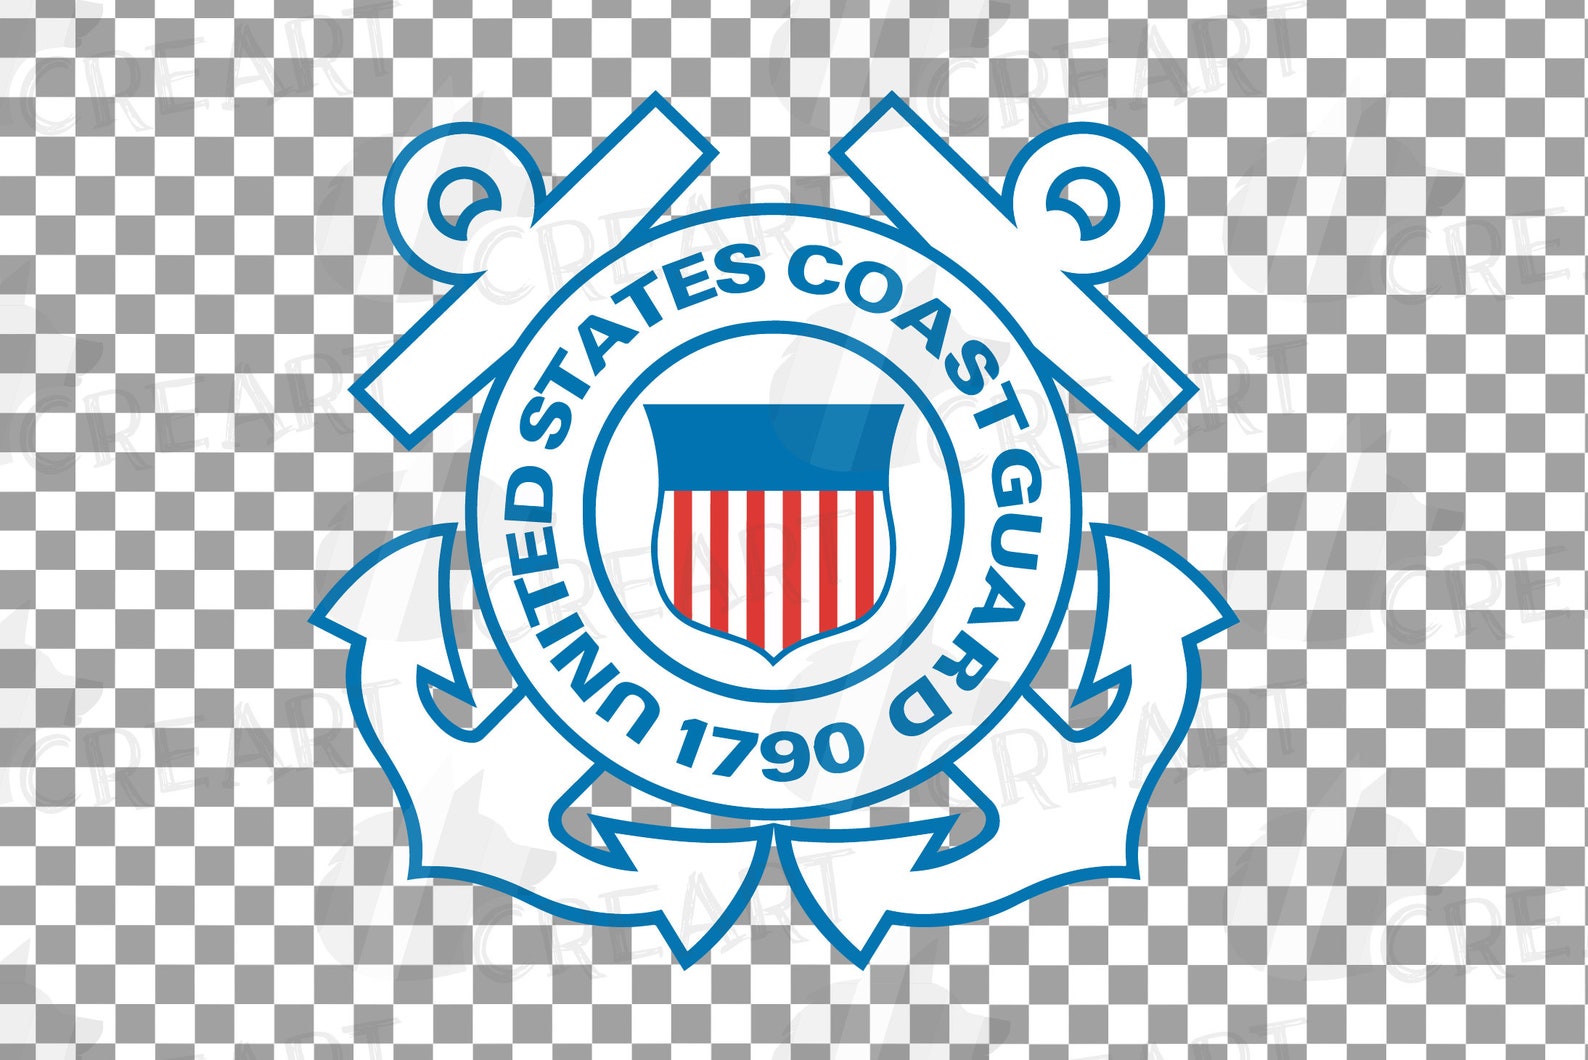 U S Coast Guard Enlisted Rank Insignia Vector Image Vrogue